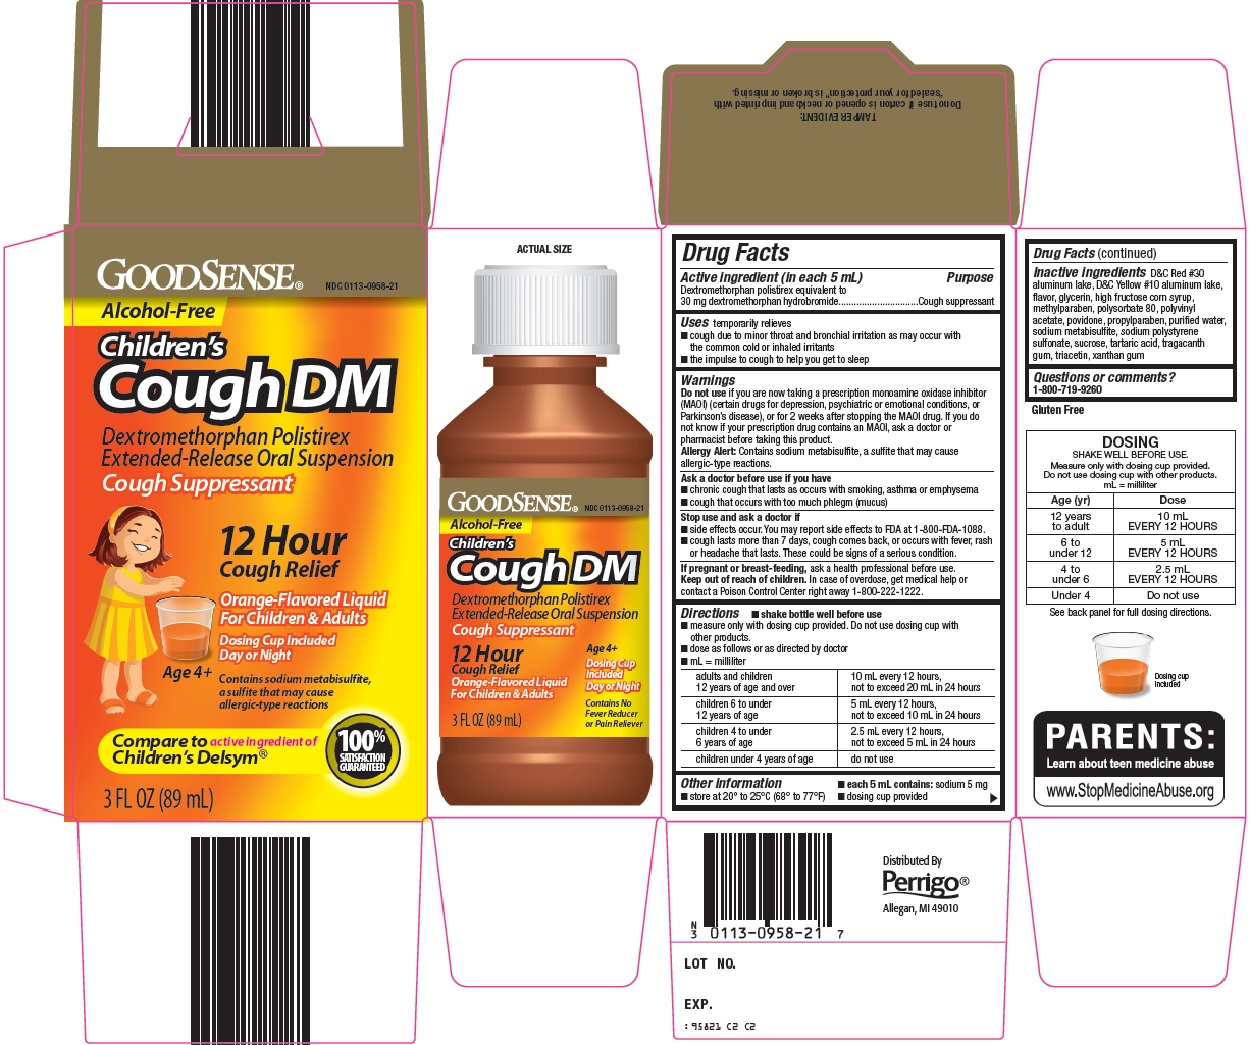 GoodSense Cough DM image